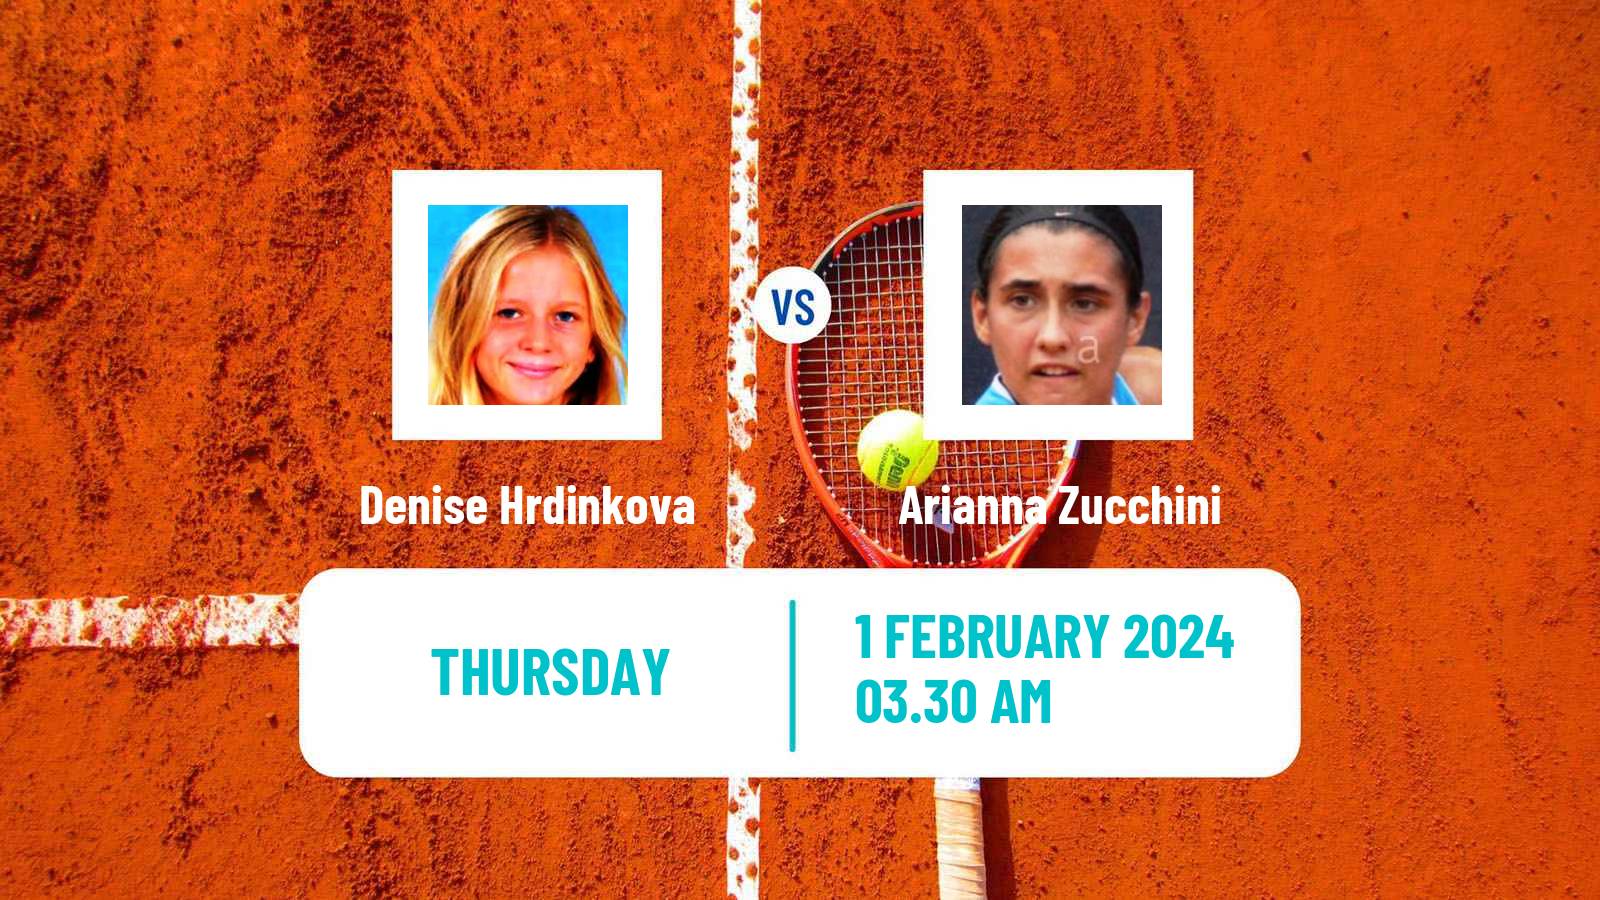 Tennis ITF W15 Monastir 3 Women Denise Hrdinkova - Arianna Zucchini